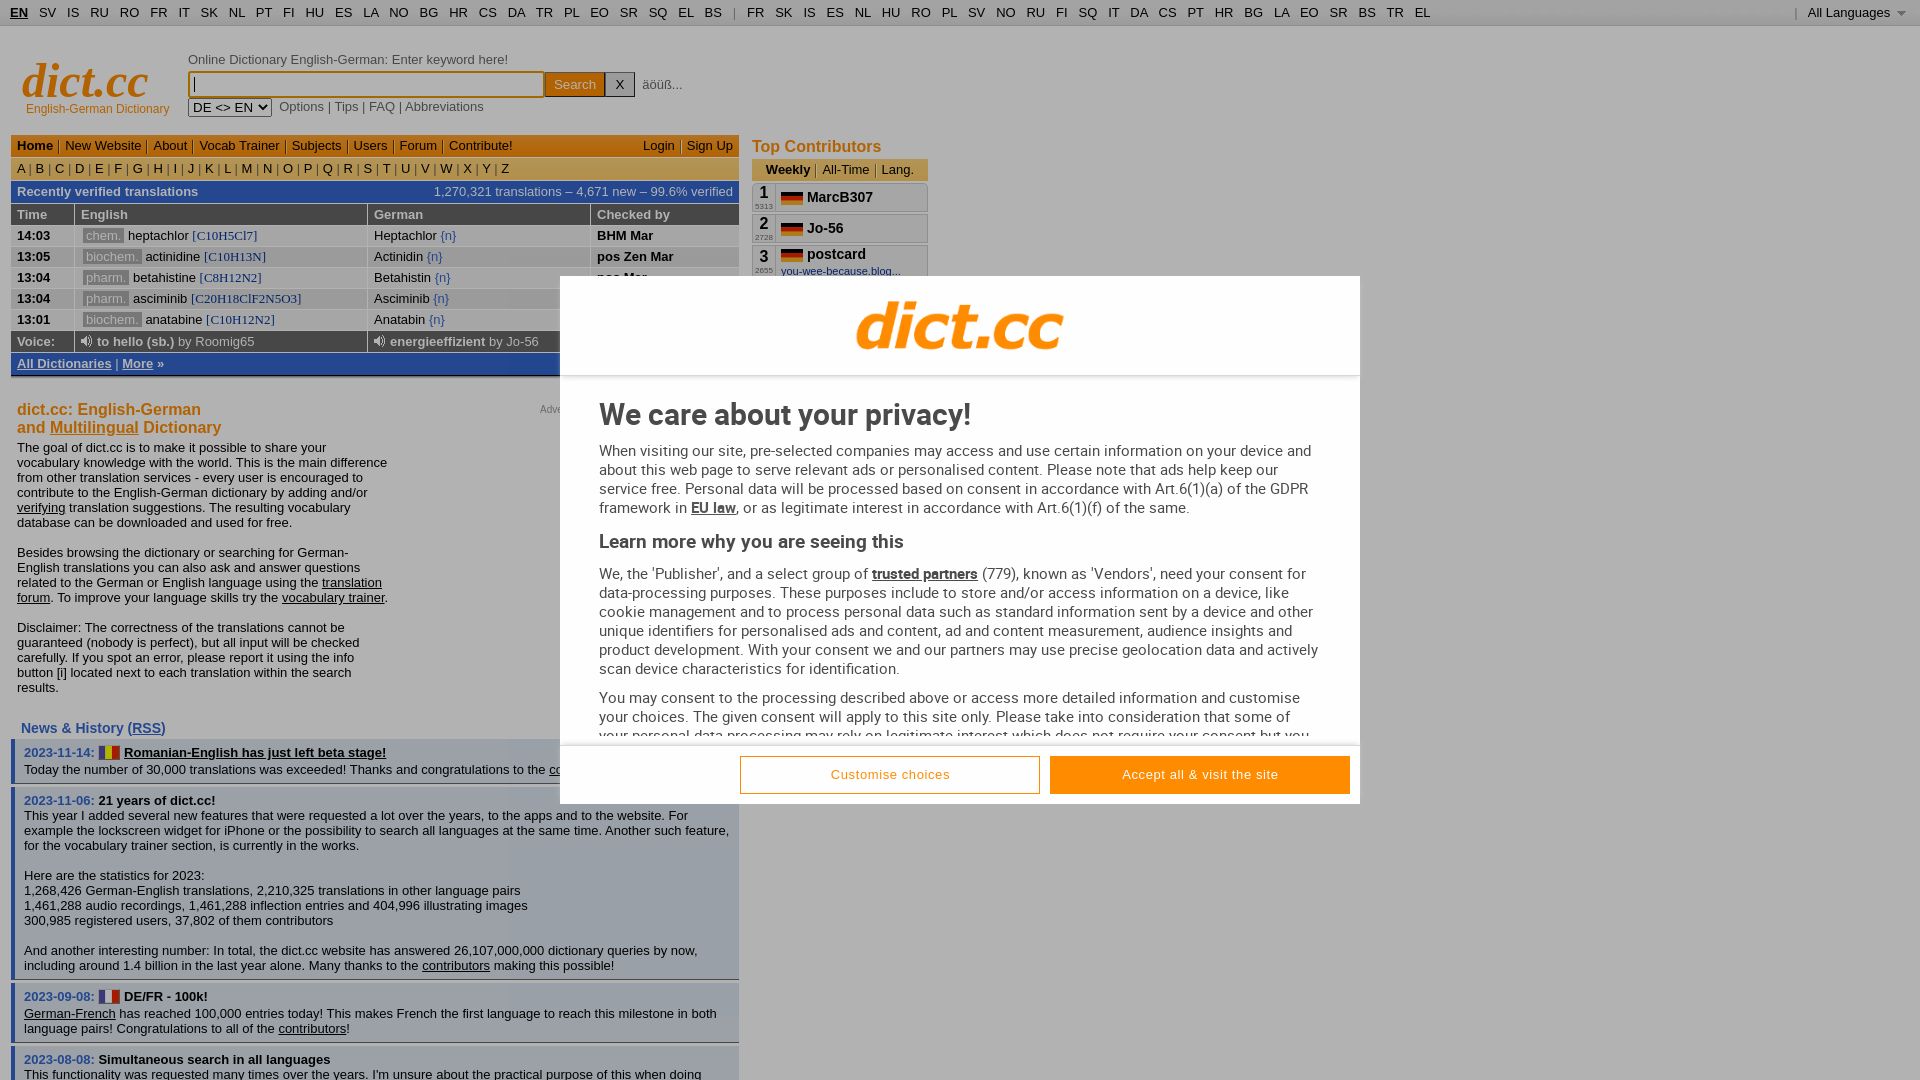 Website status dict.cc is   ONLINE